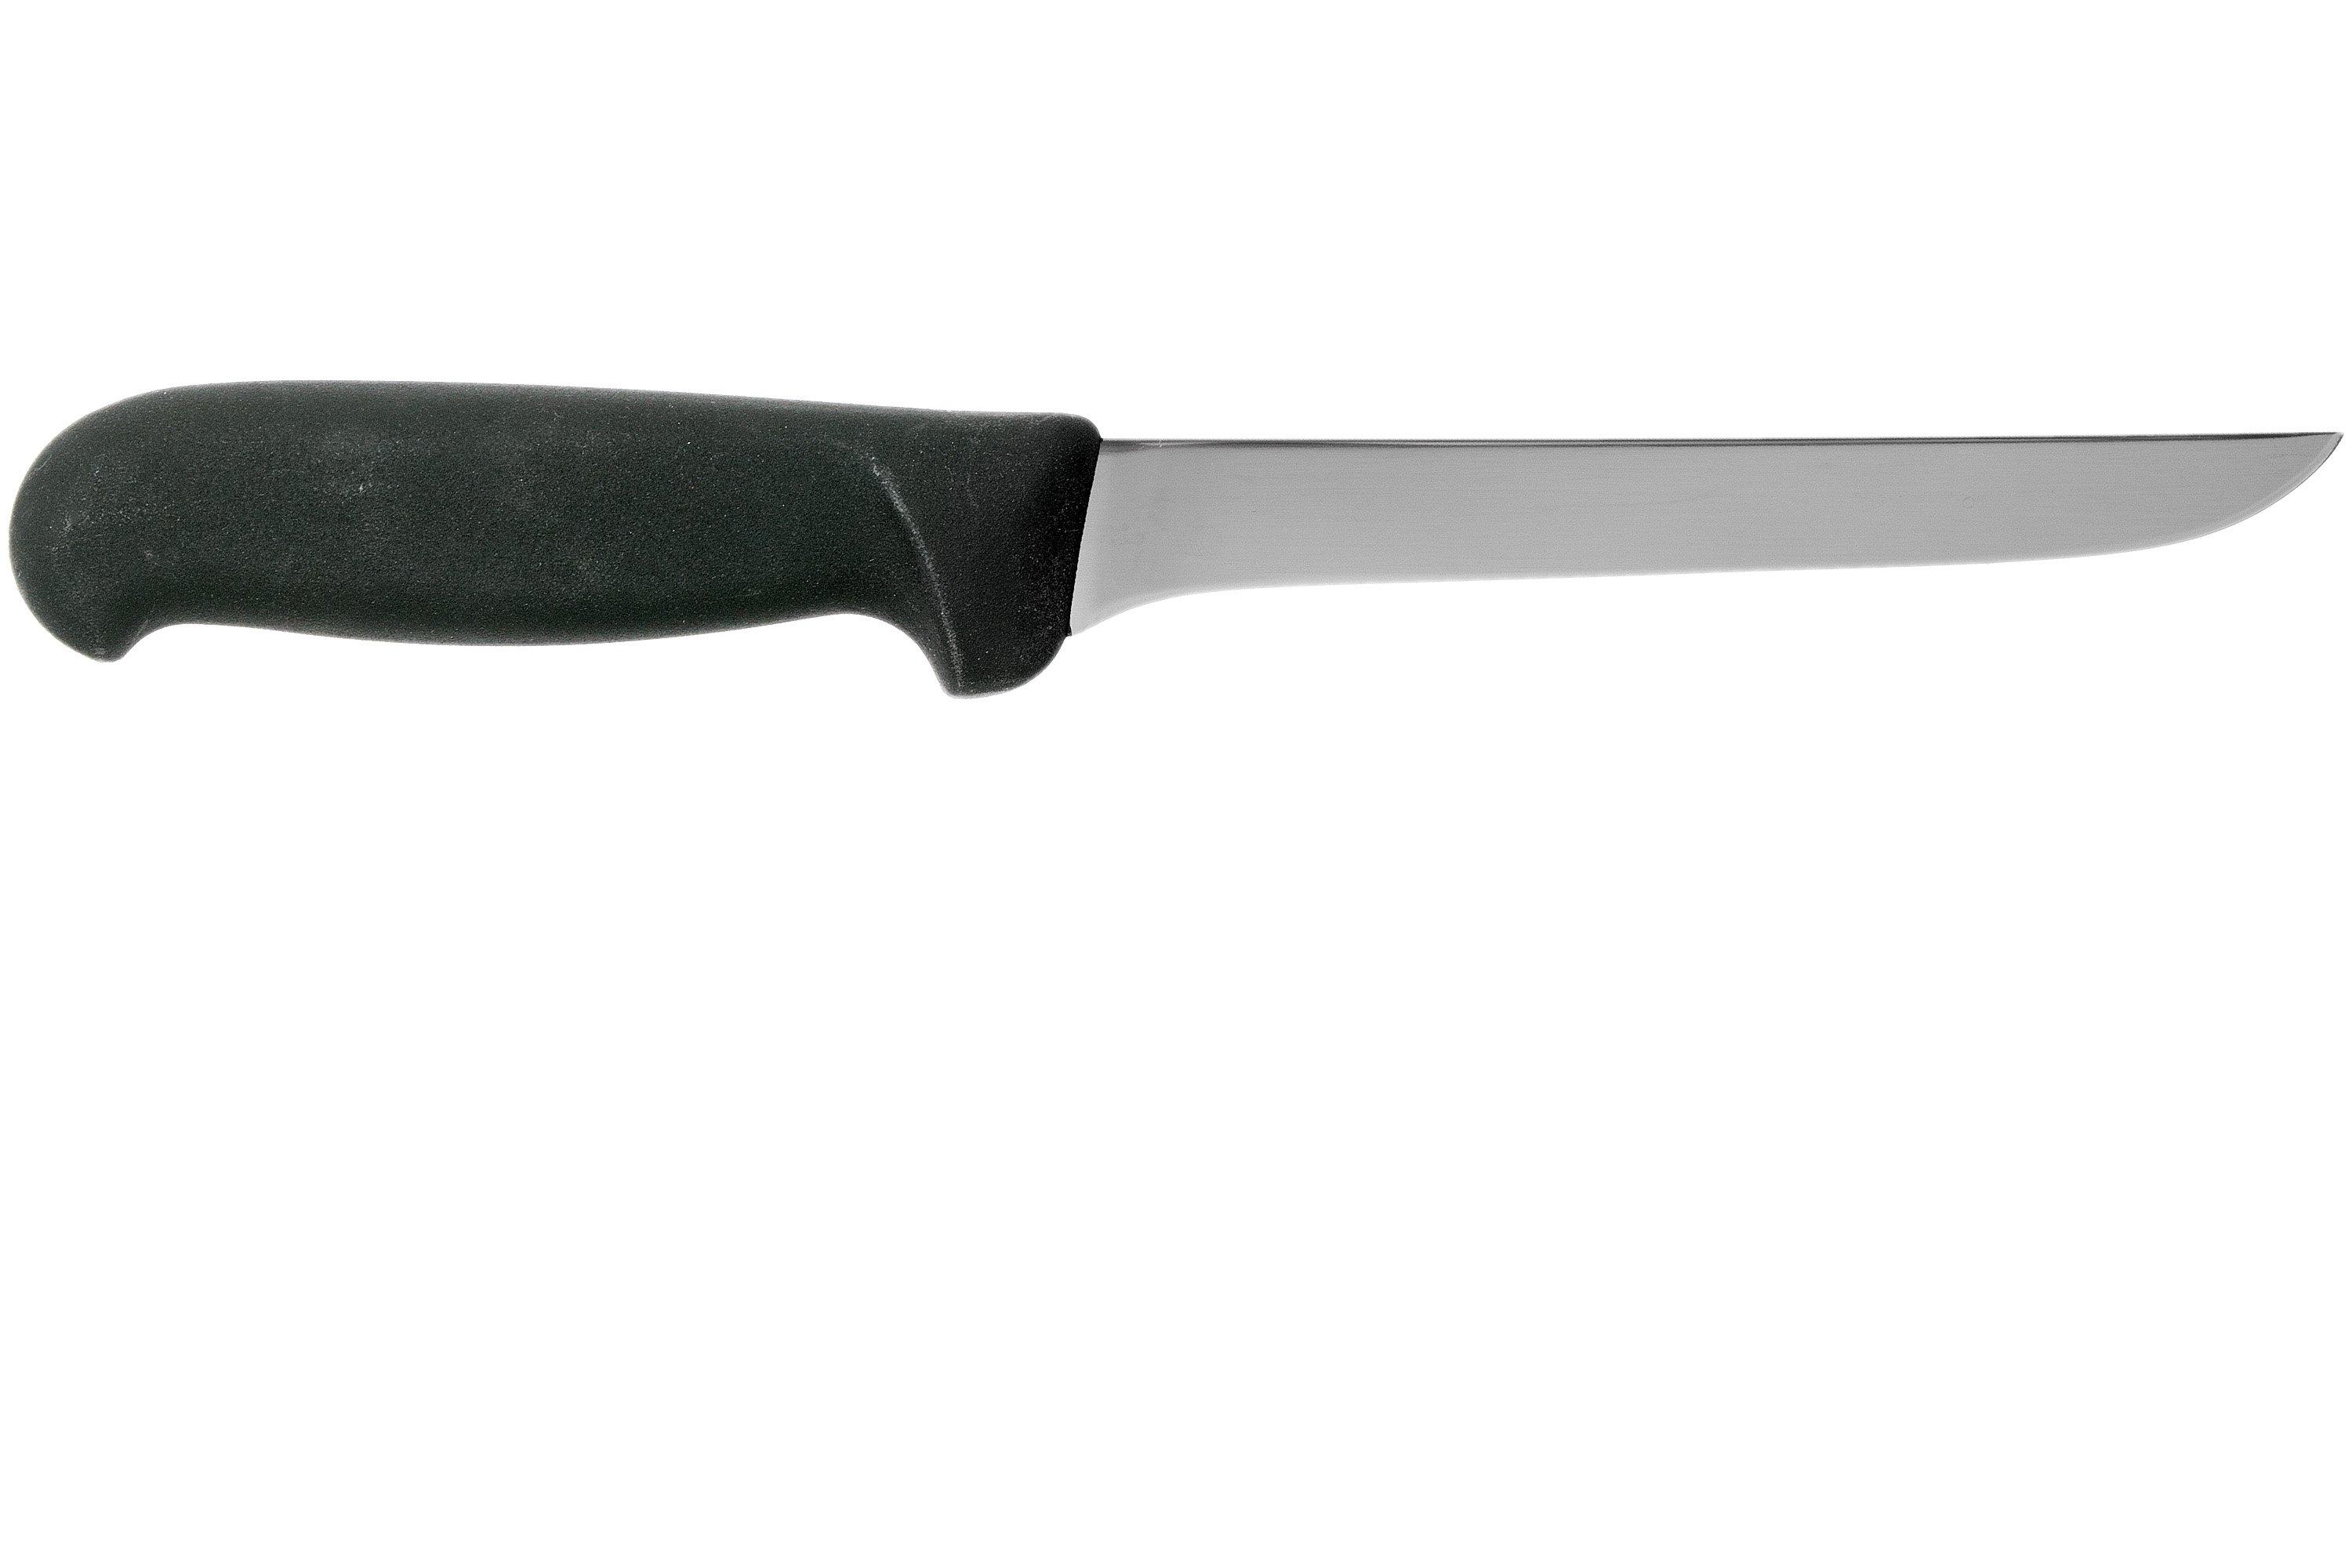 Victorinox Fibrox Boning Knife Narrow 15 Cm 5 6303 15 Advantageously Shopping At